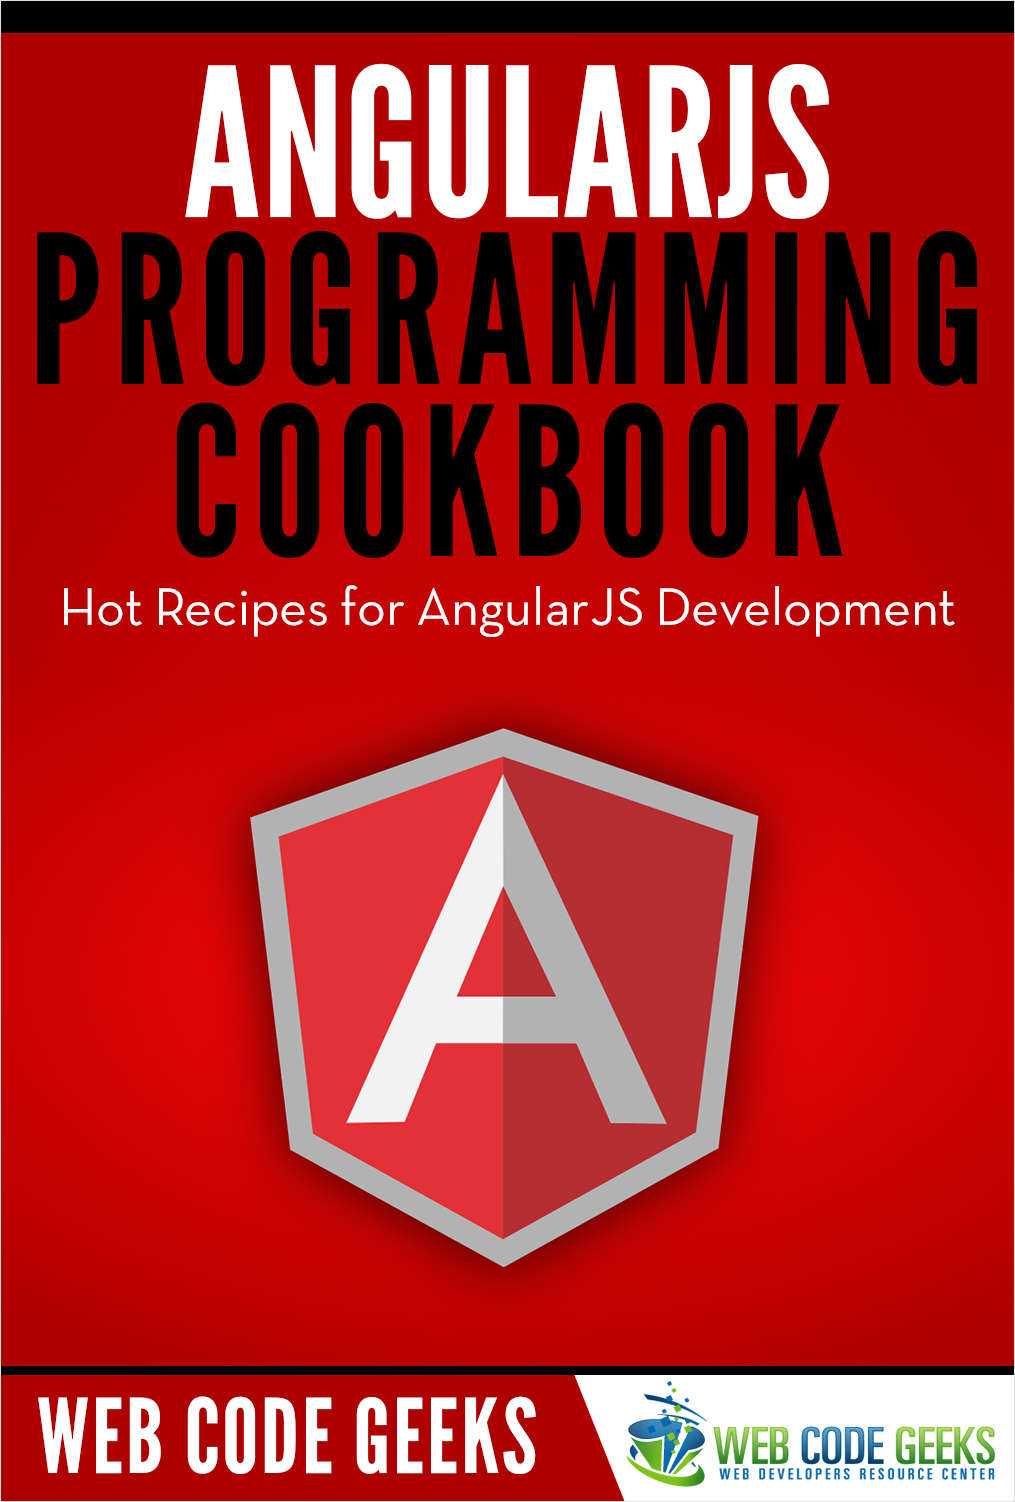 AngularJS Programming Cookbook